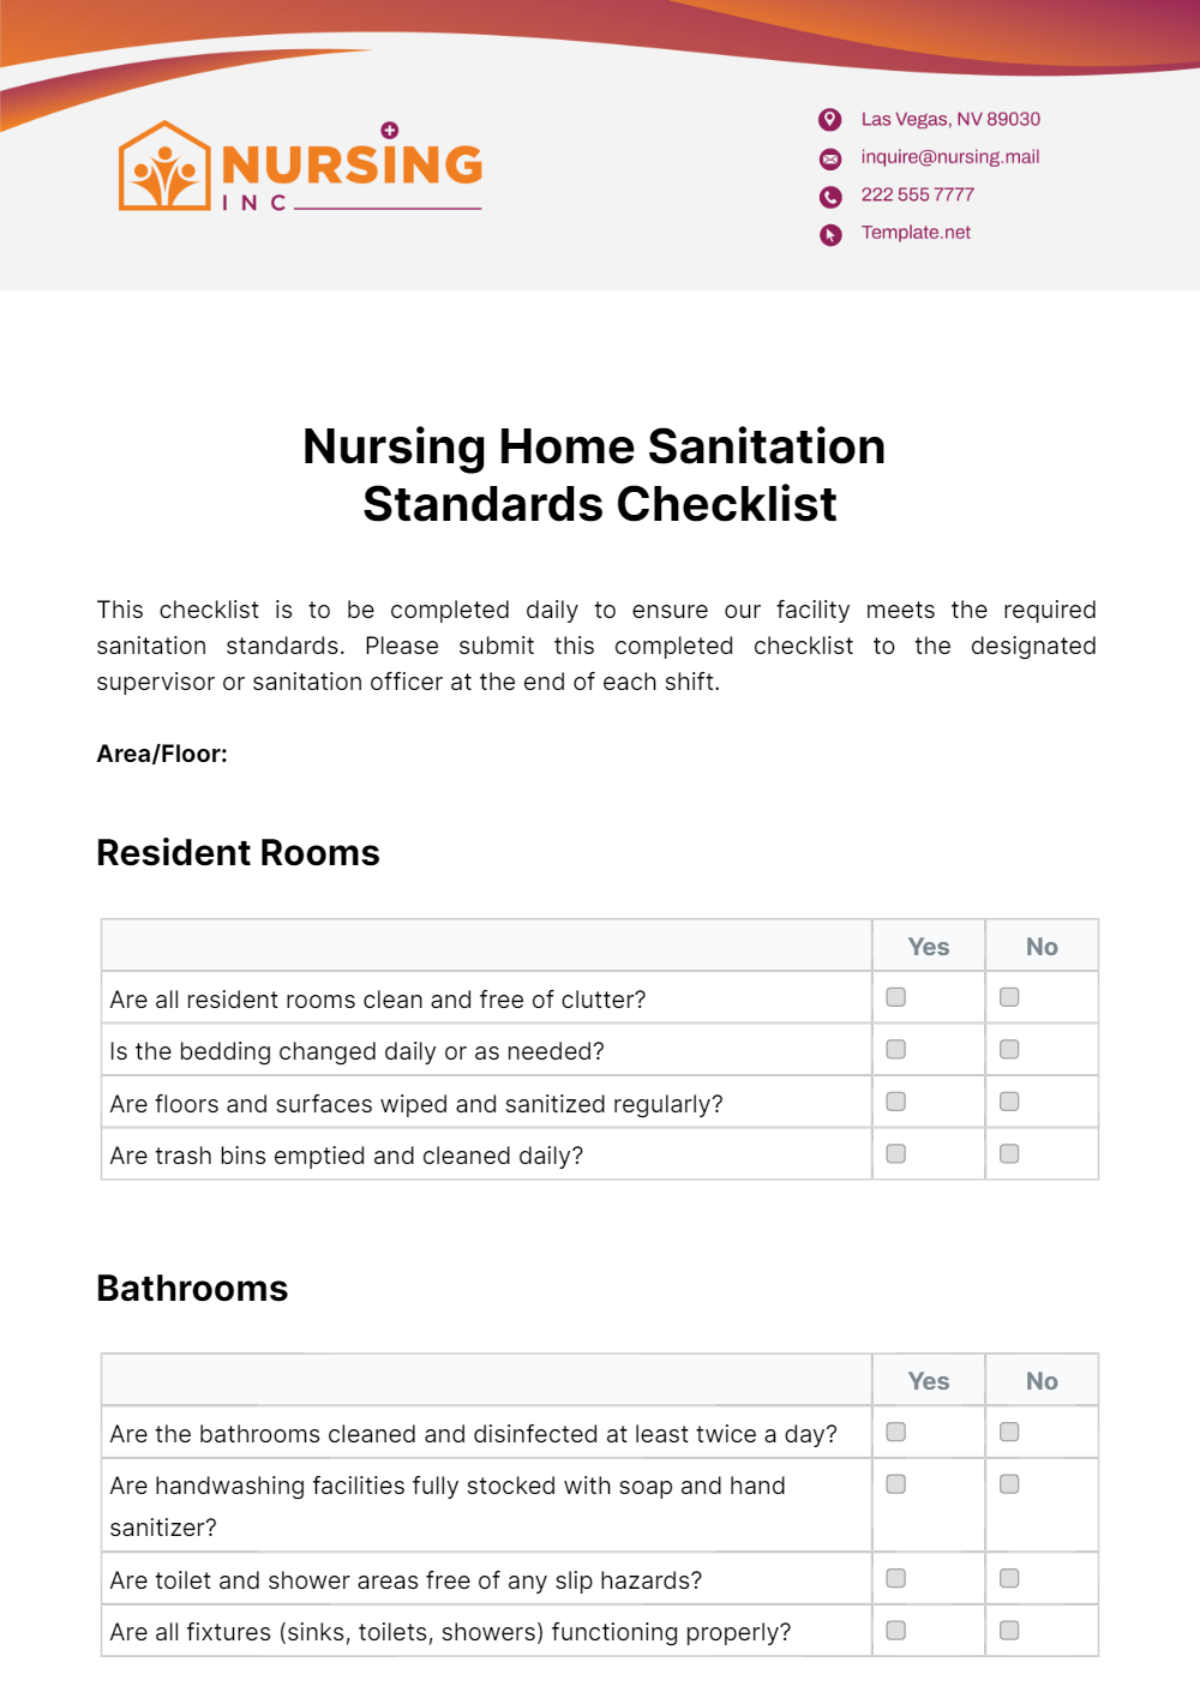 Nursing Home Sanitation Standards Checklist Template